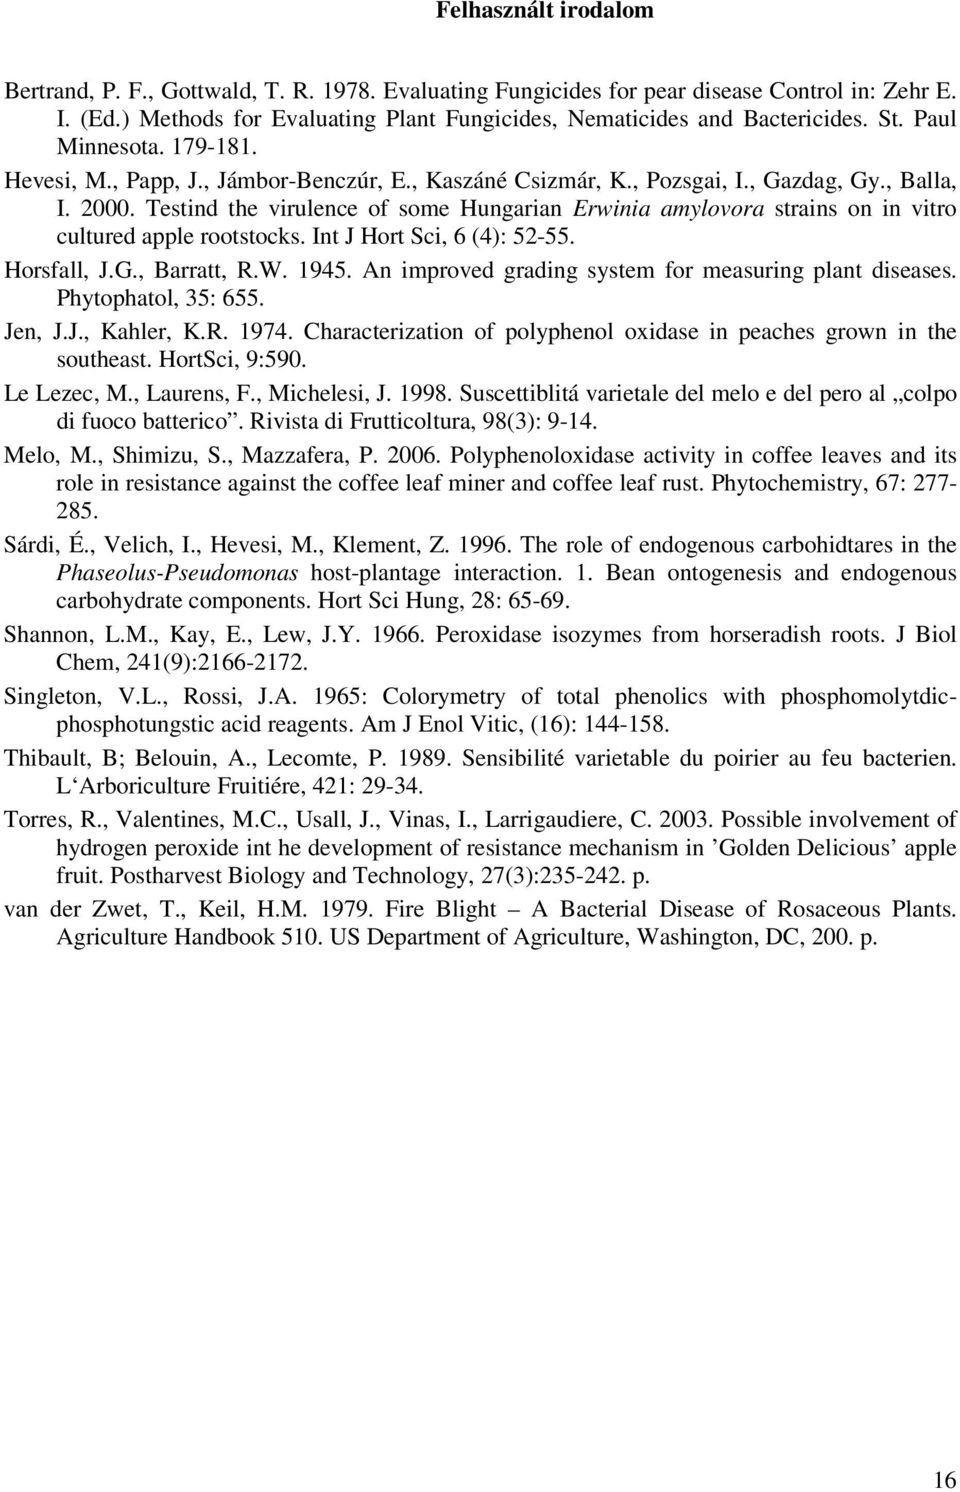 Testind the virulence of some Hungarian Erwinia amylovora strains on in vitro cultured apple rootstocks. Int J Hort Sci, 6 (4): 52-55. Horsfall, J.G., Barratt, R.W. 1945.